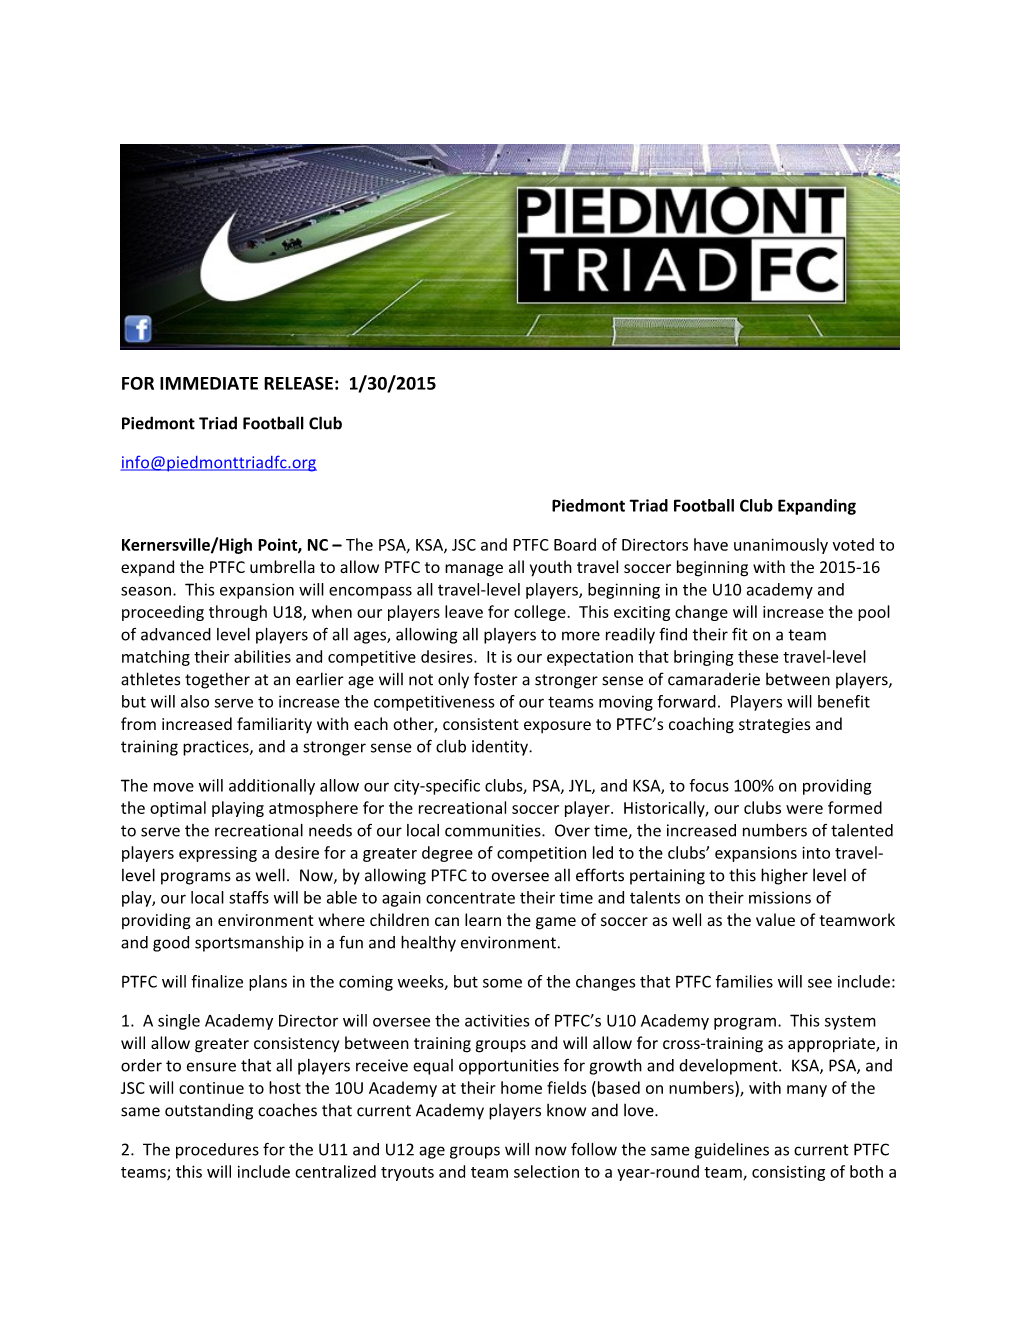 Piedmont Triad Football Club